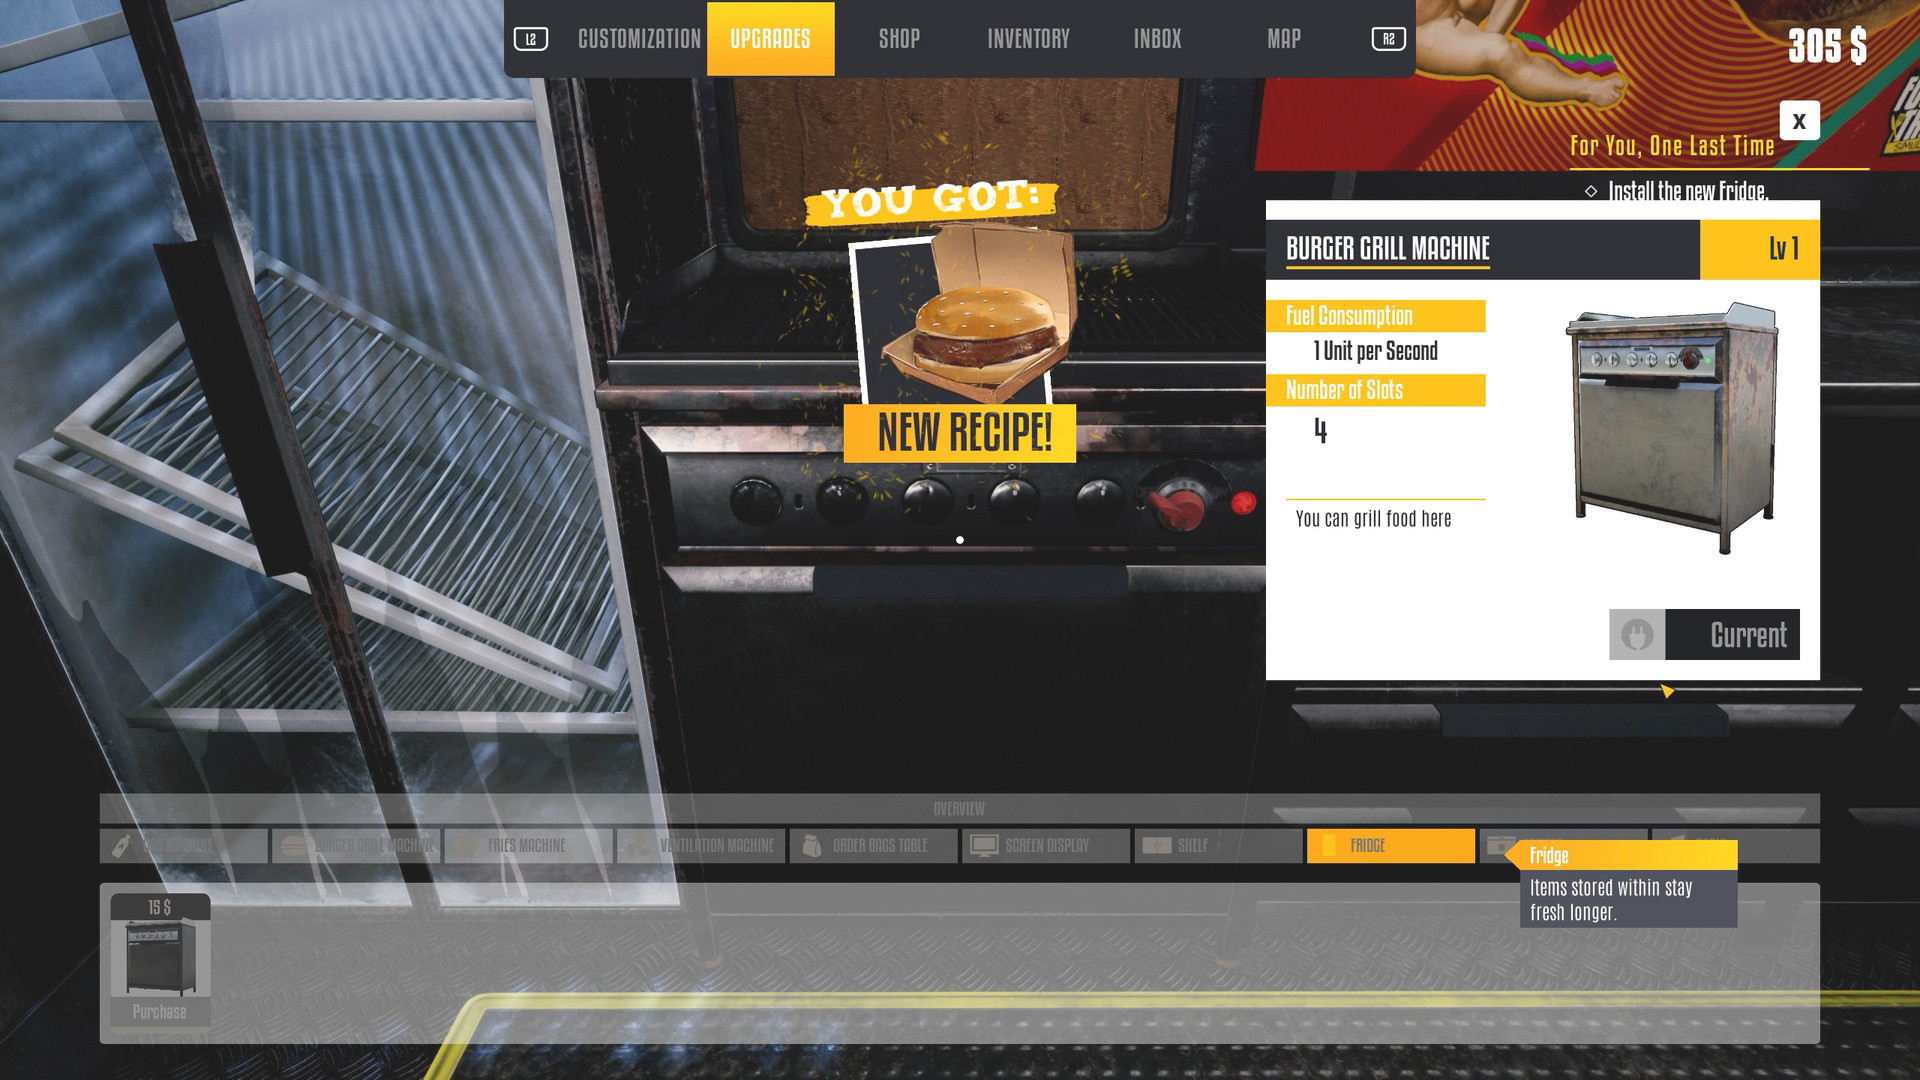 Food Truck Simulator EU V2 Steam Altergift